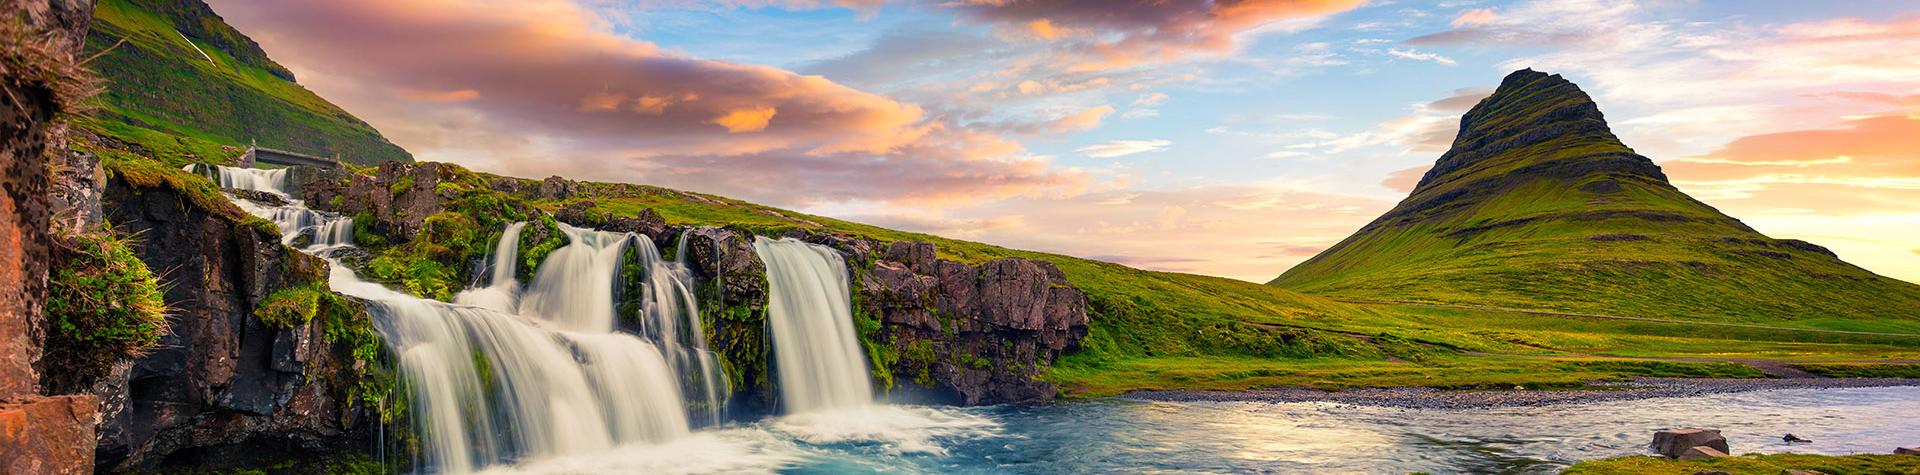 Iceland tailor made tours: waterfall Kirkjufellsfoss and mountain Kirkjufell, west of Iceland.